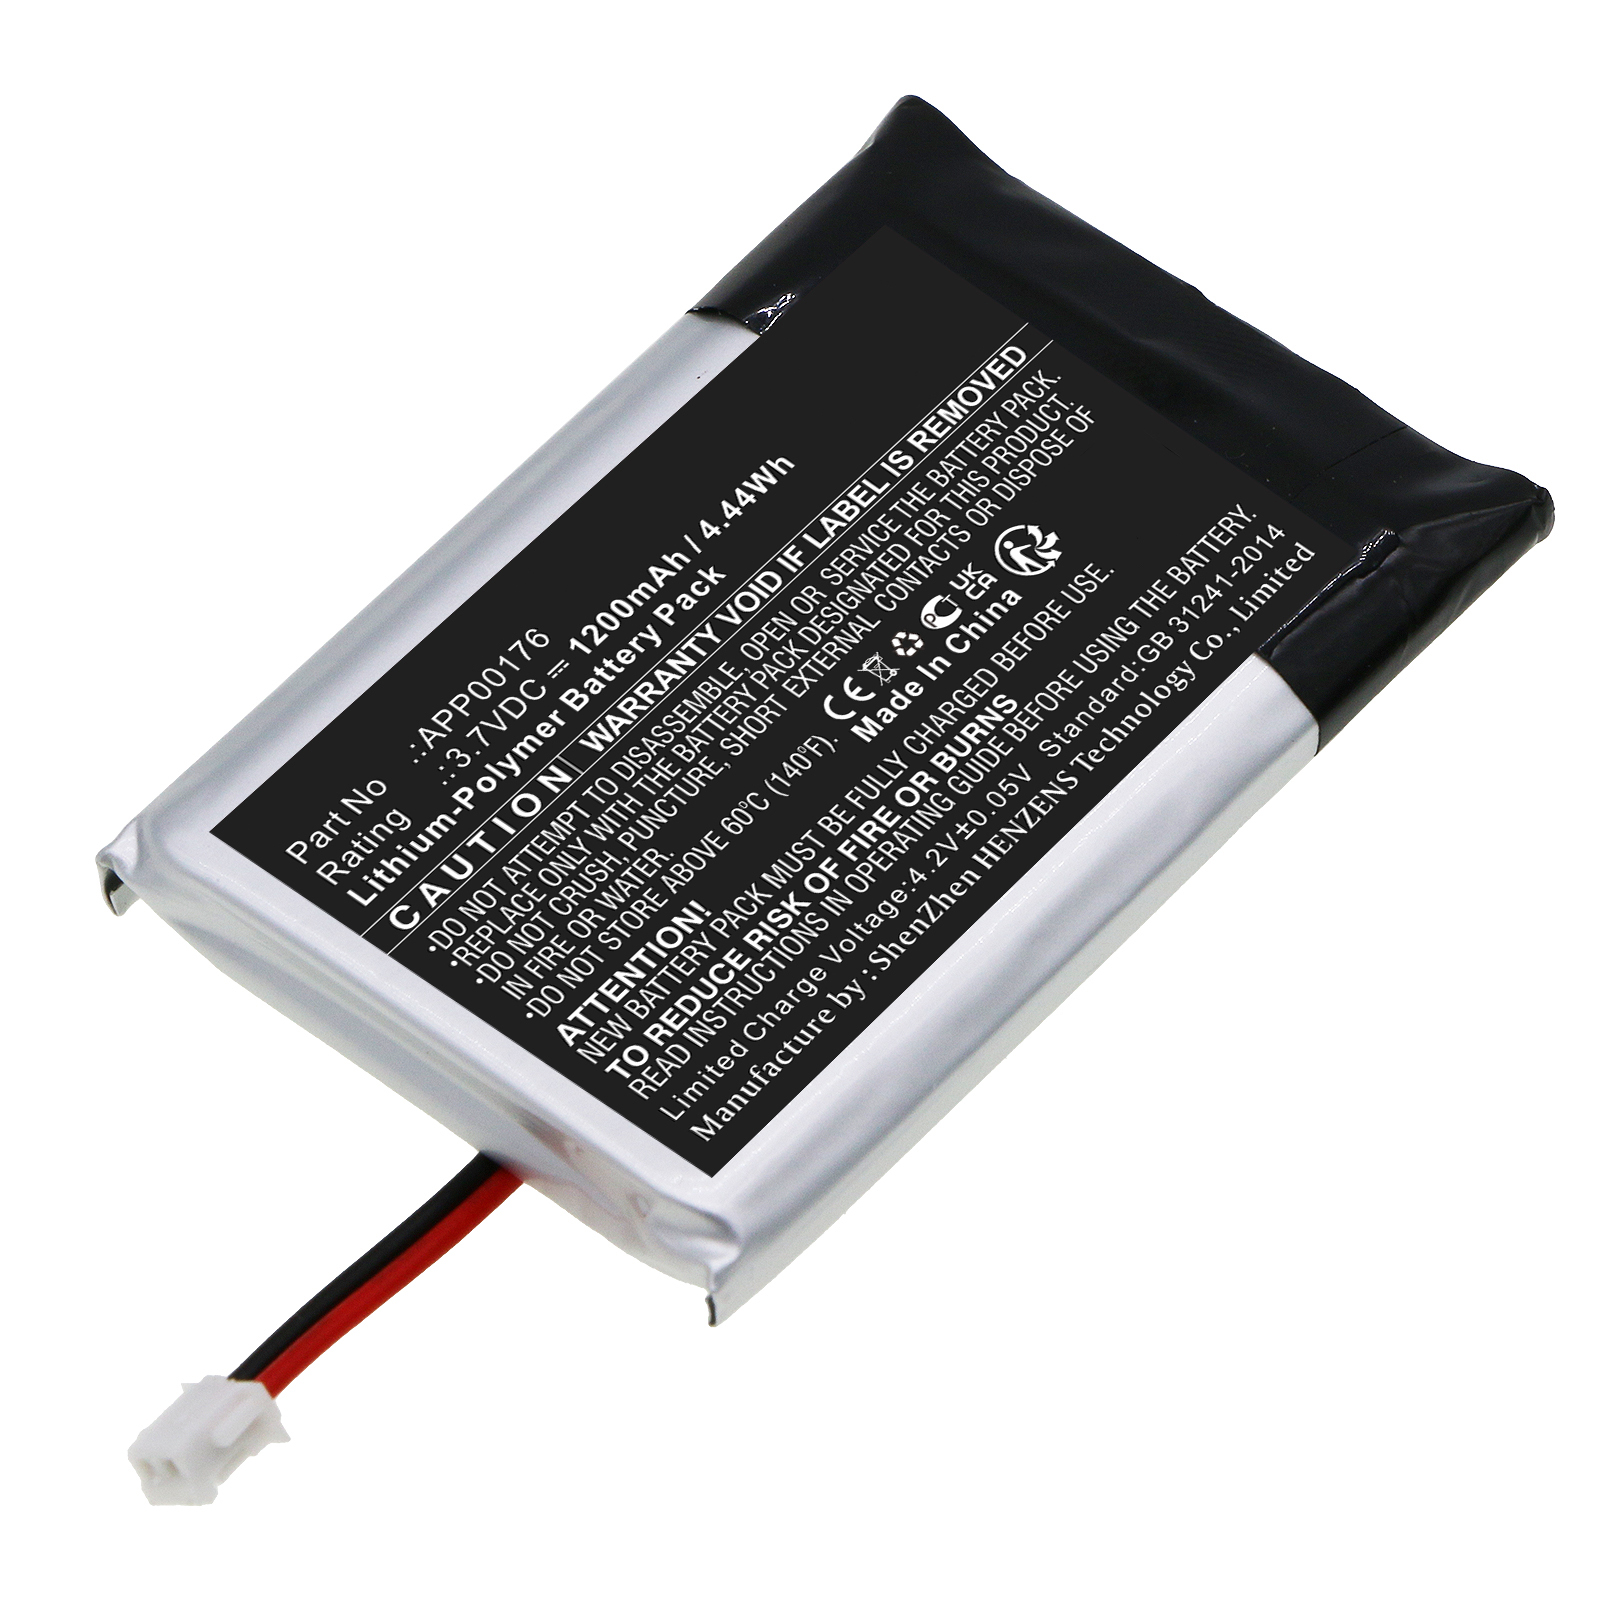 Batteries for MINN KOTARemote Control